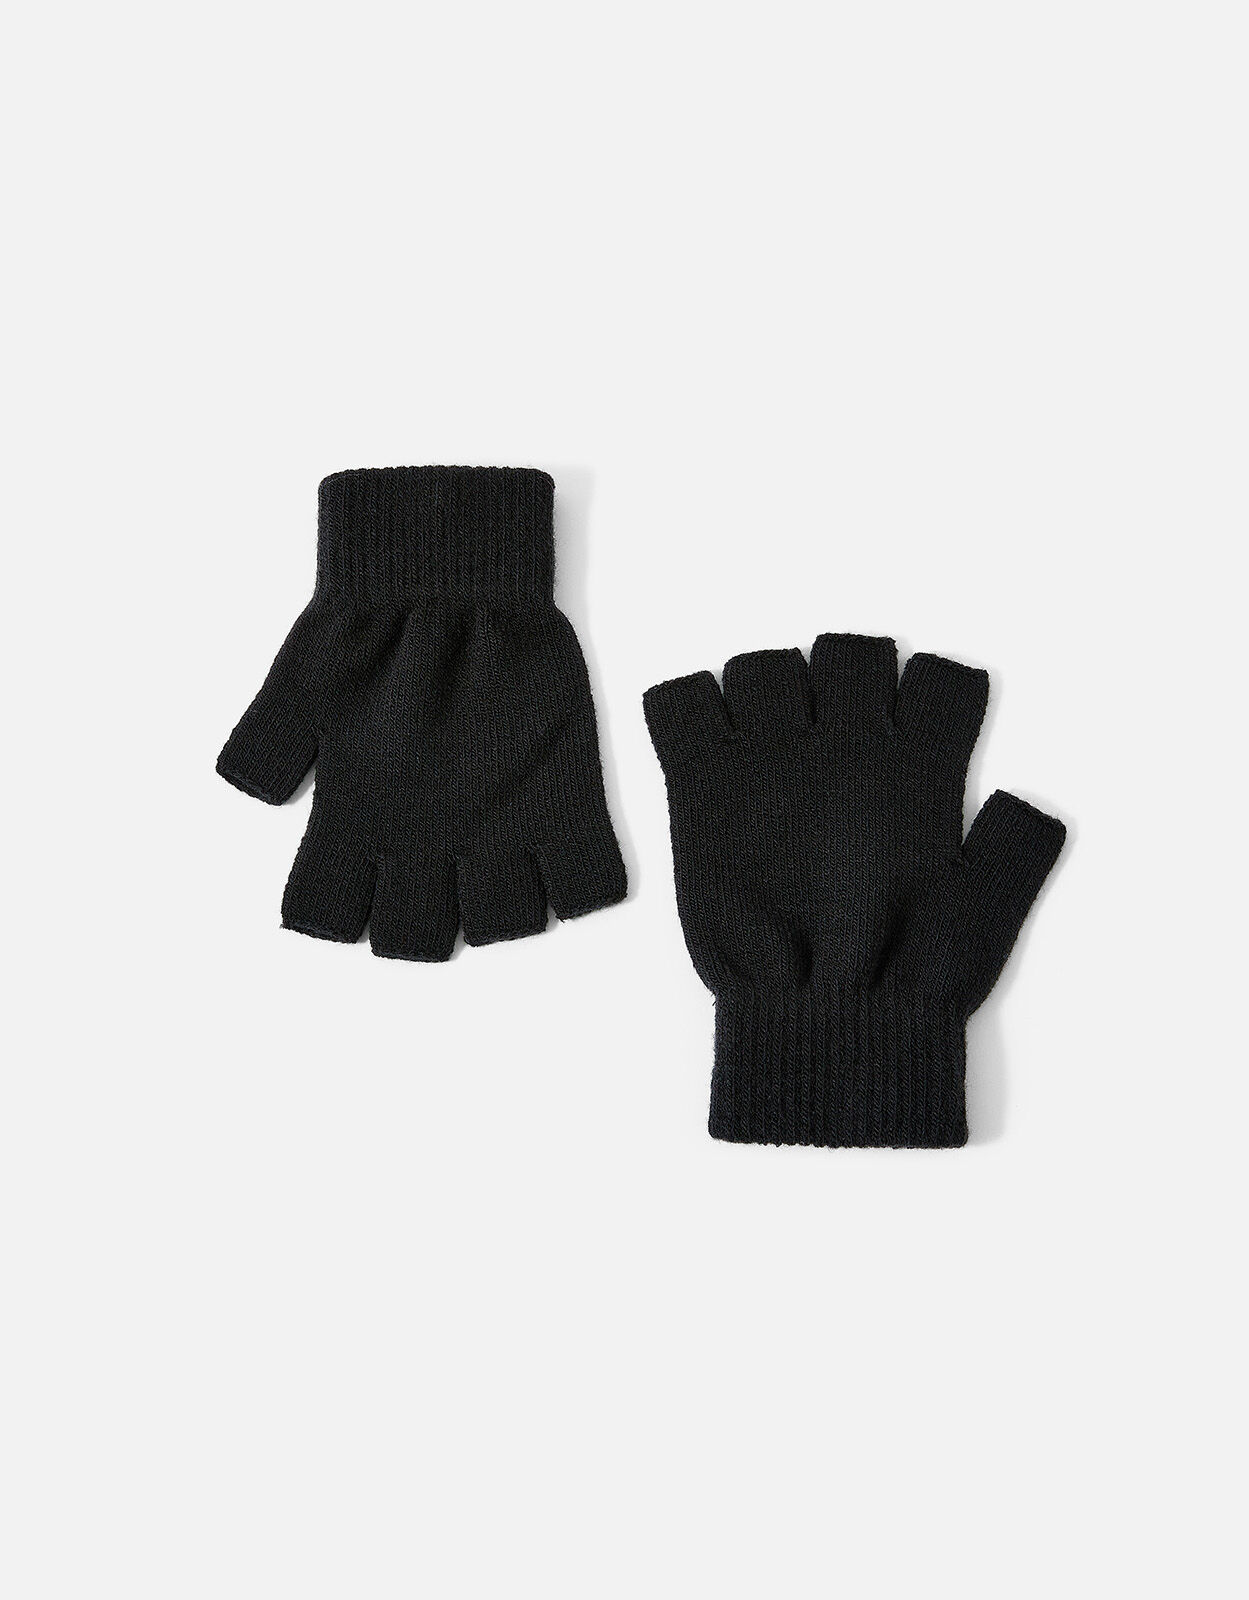 Peter Storm Women's Thinsulate Fingerless Gloves